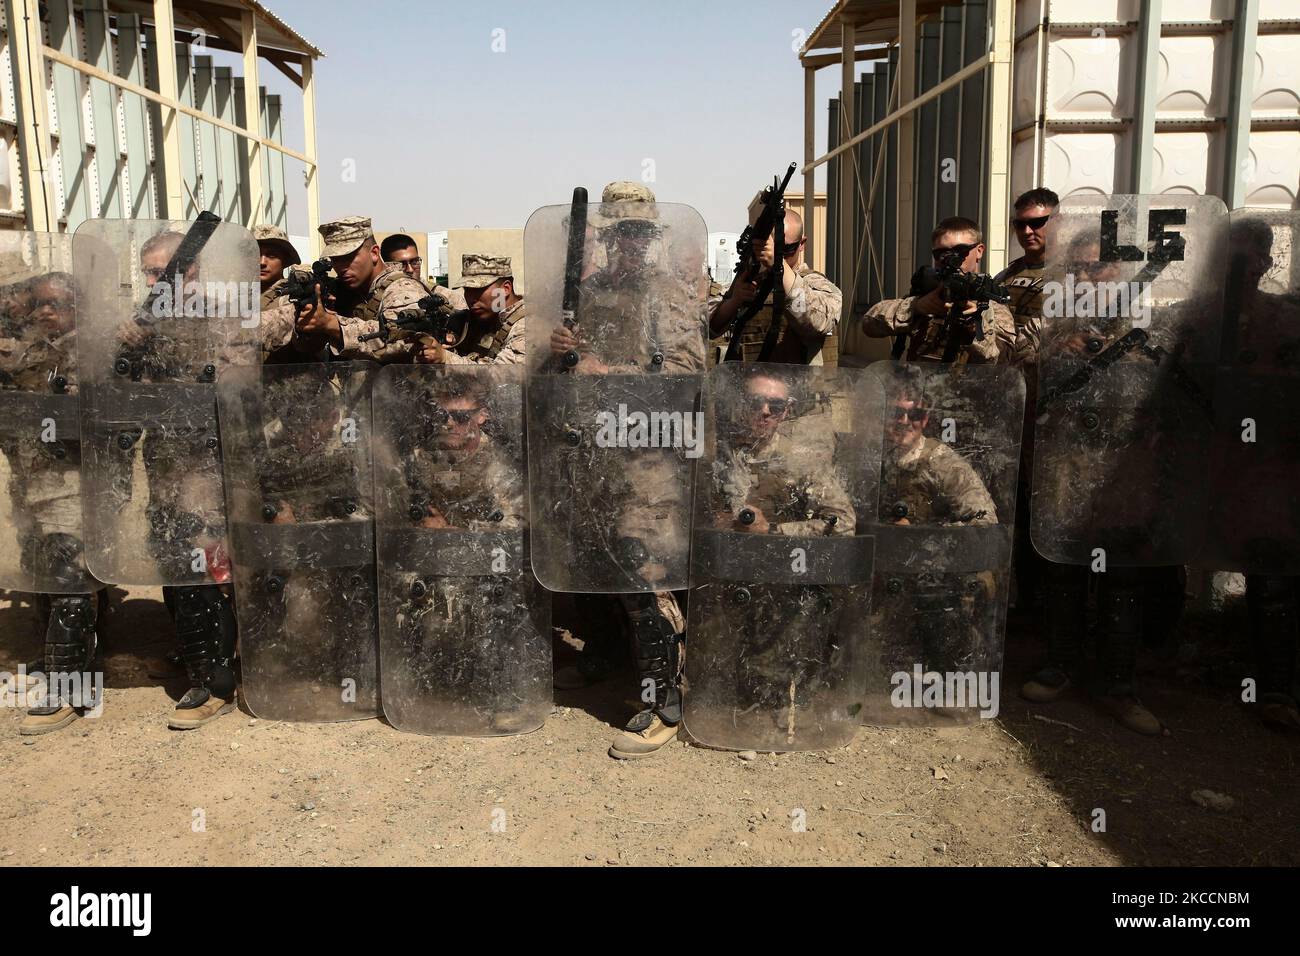 U.S. Marines participate in the riot control. Stock Photo